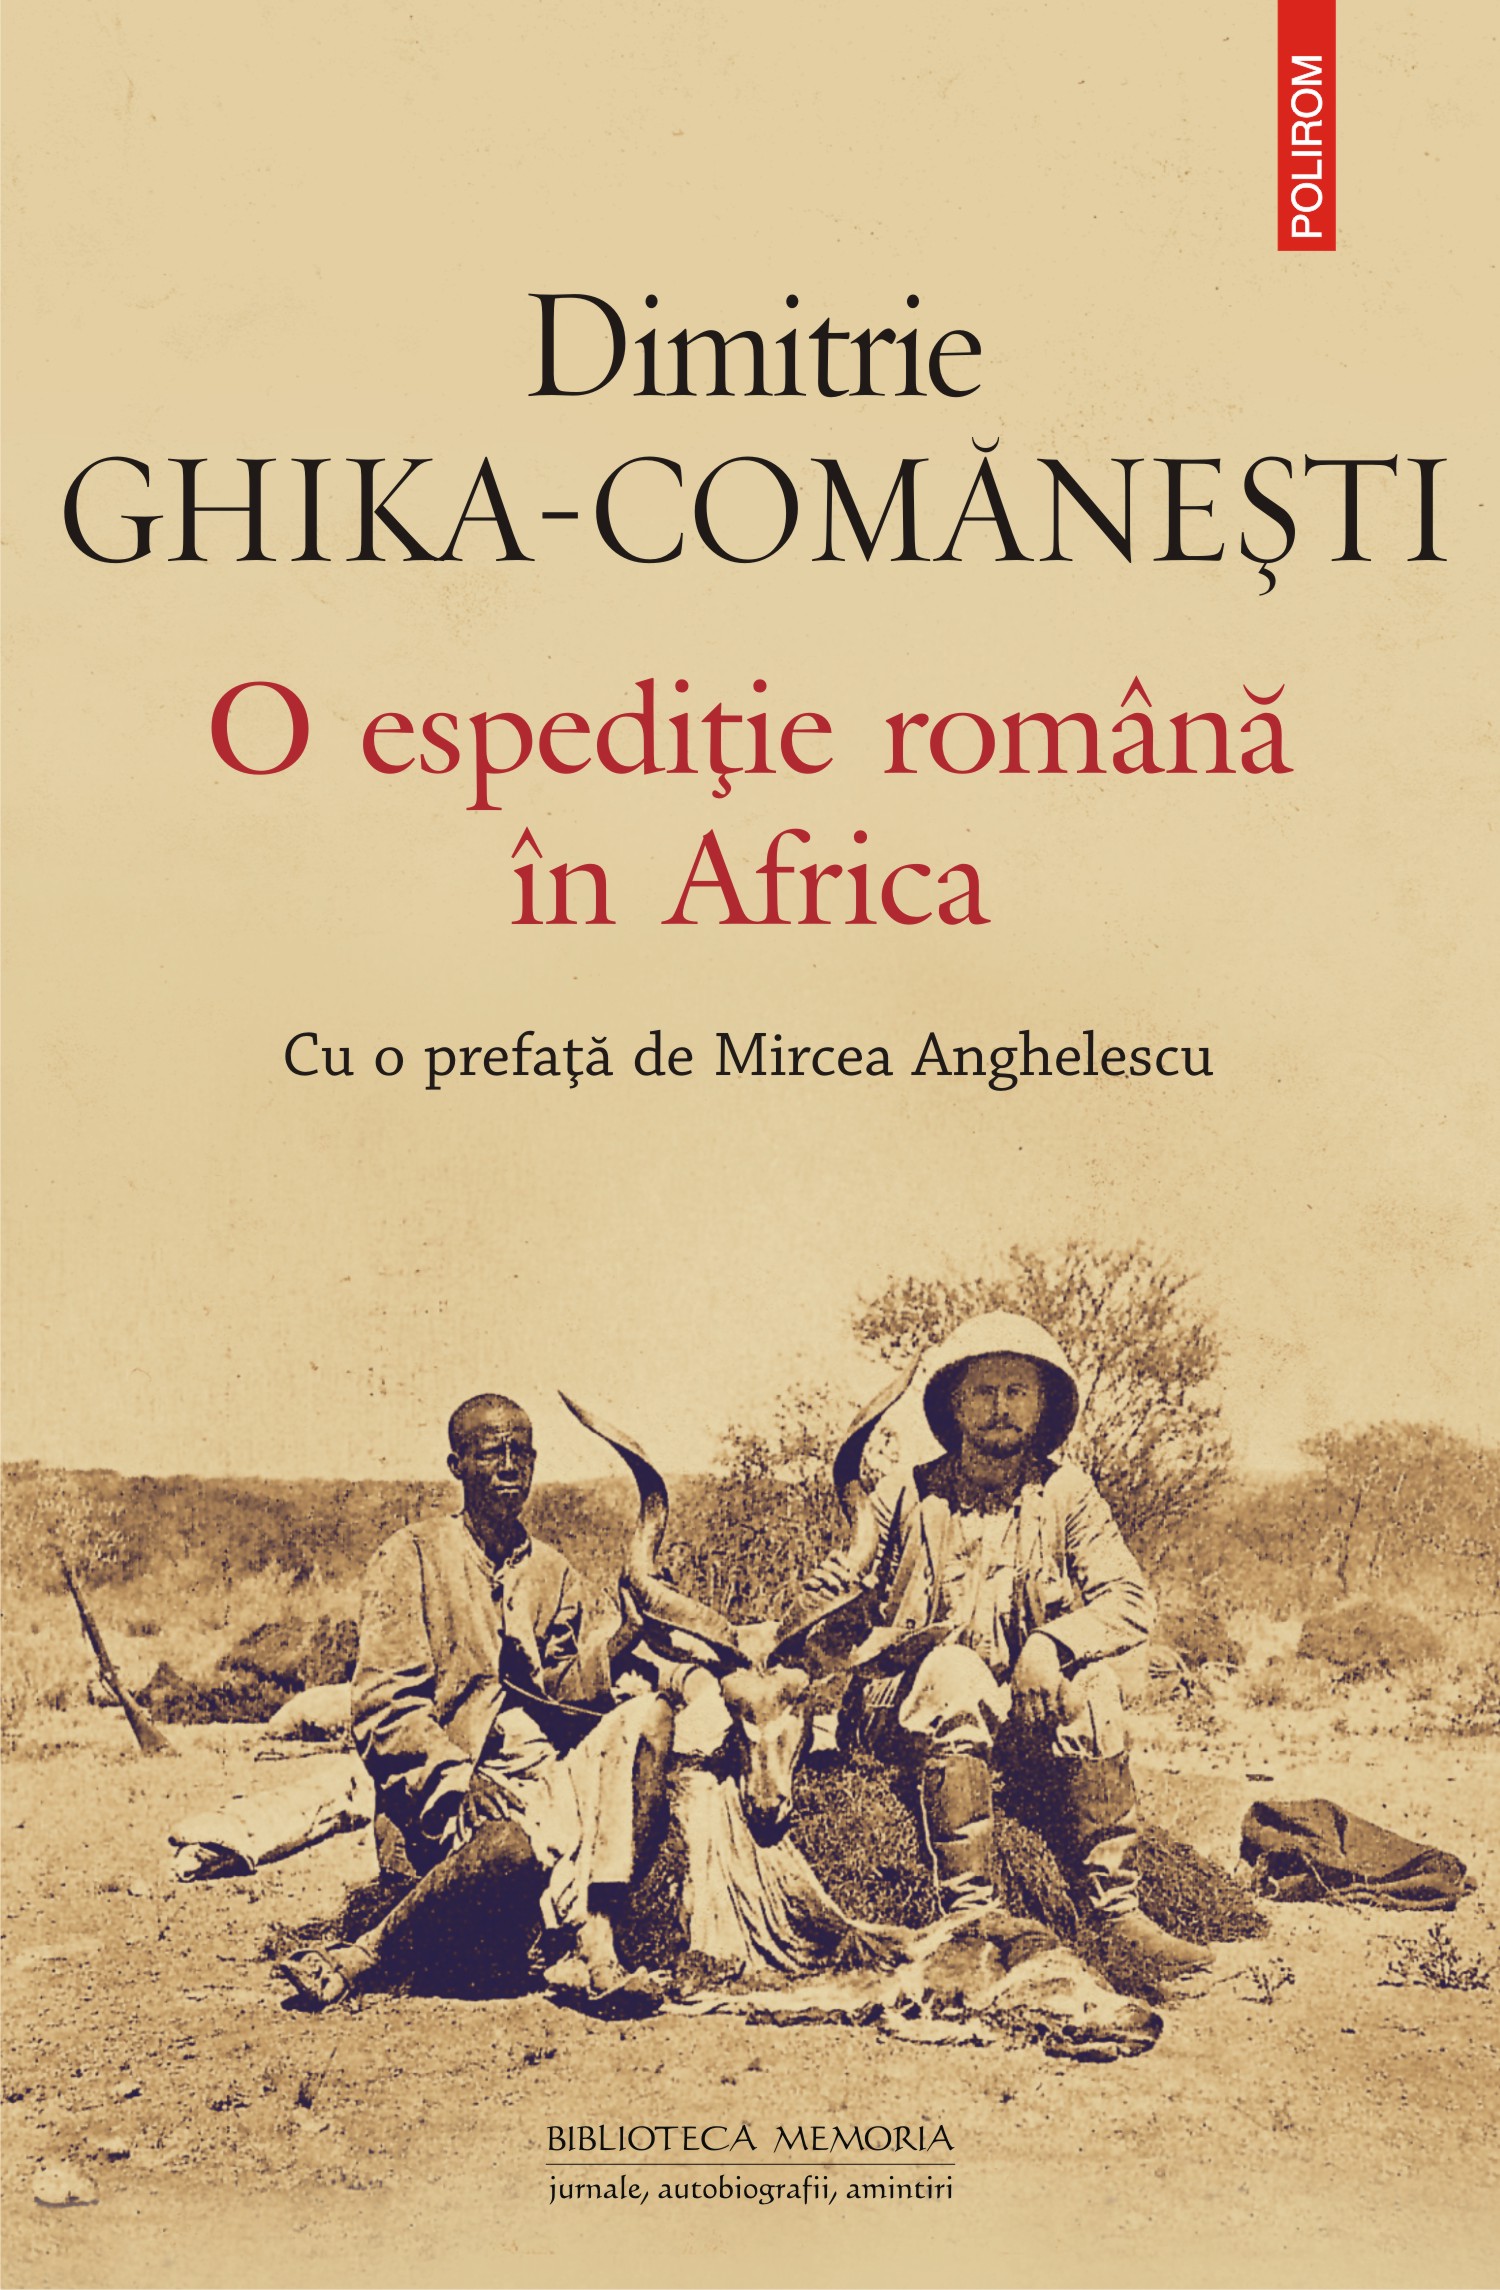 eBook O espeditie romana in Africa - Dimitrie Ghika-Comanesti